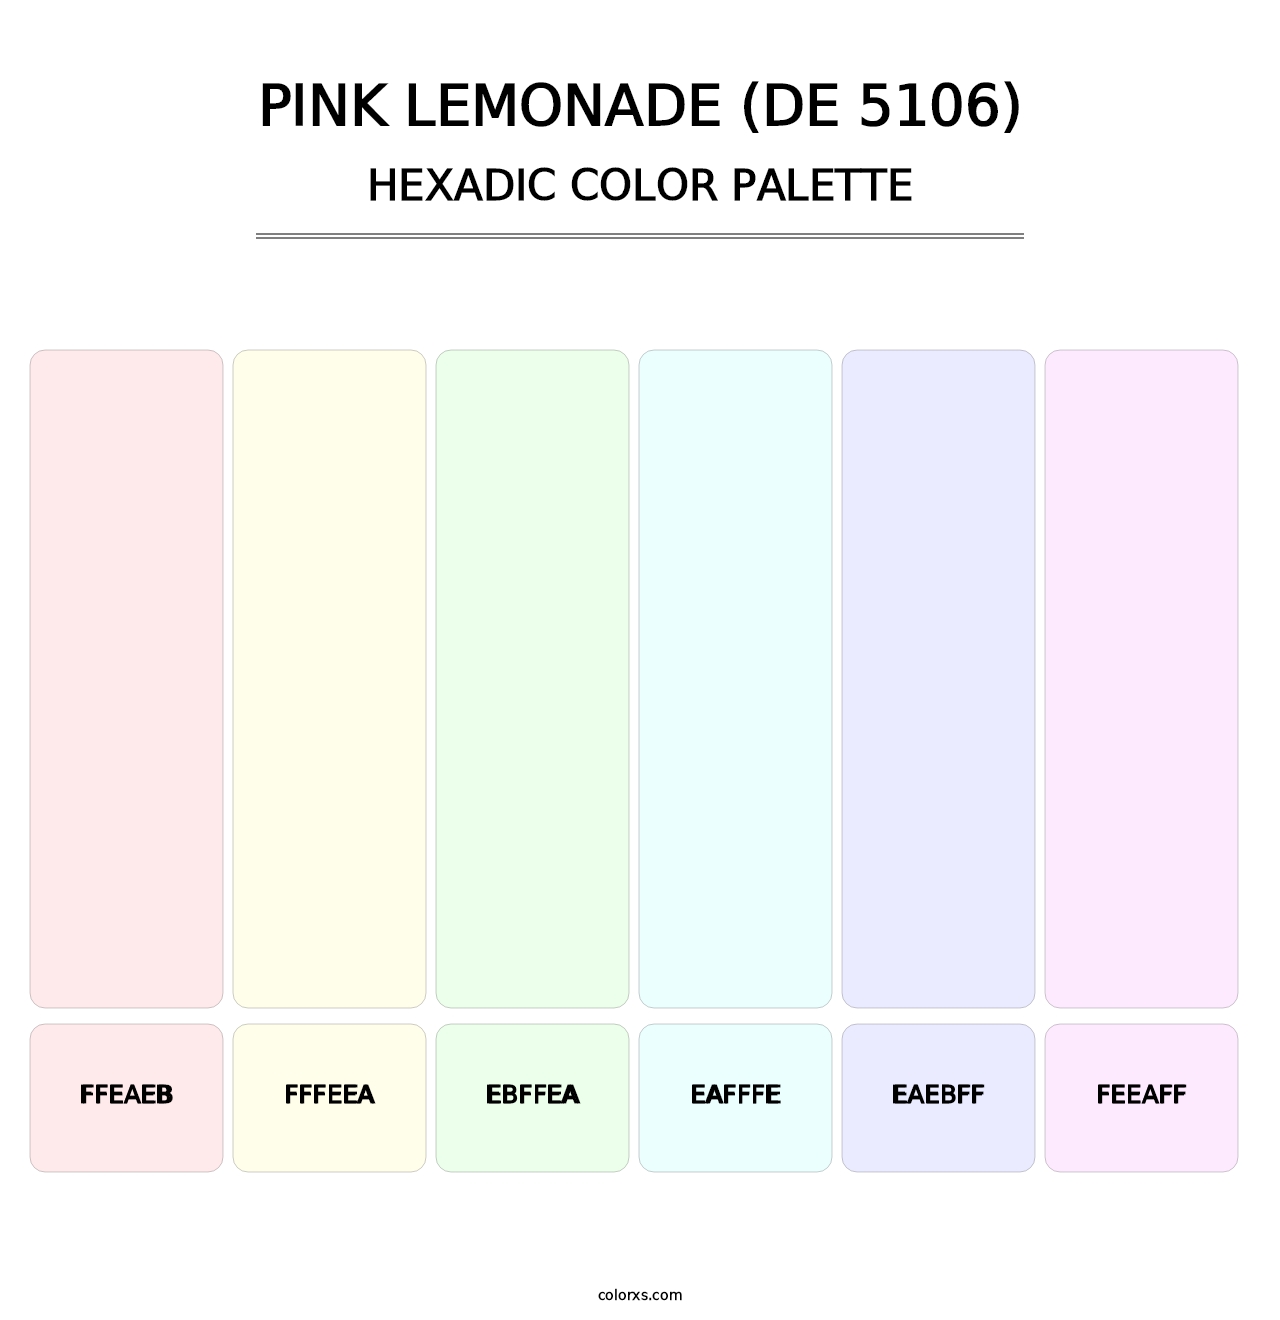 Pink Lemonade (DE 5106) - Hexadic Color Palette